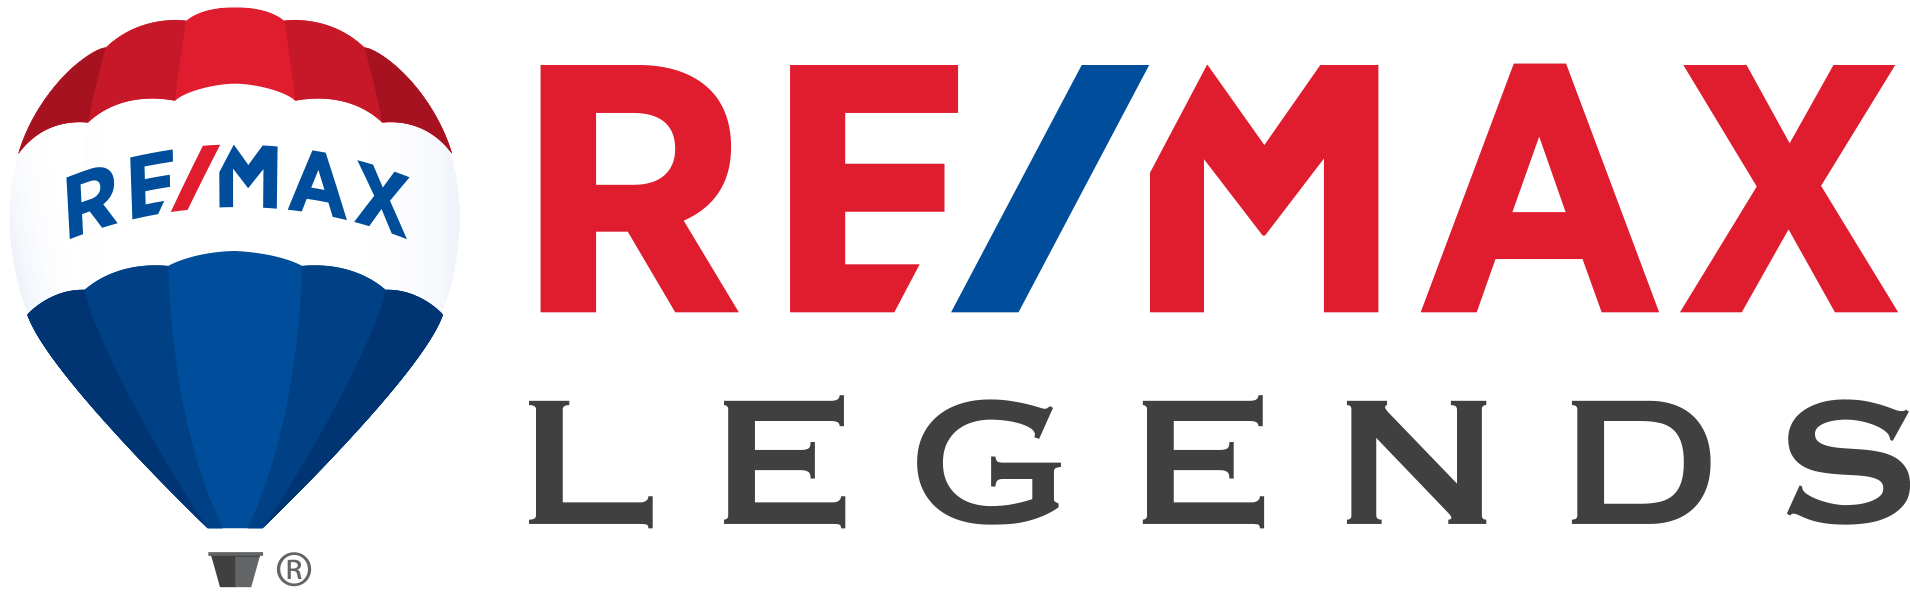 RE/MAX Legend logo